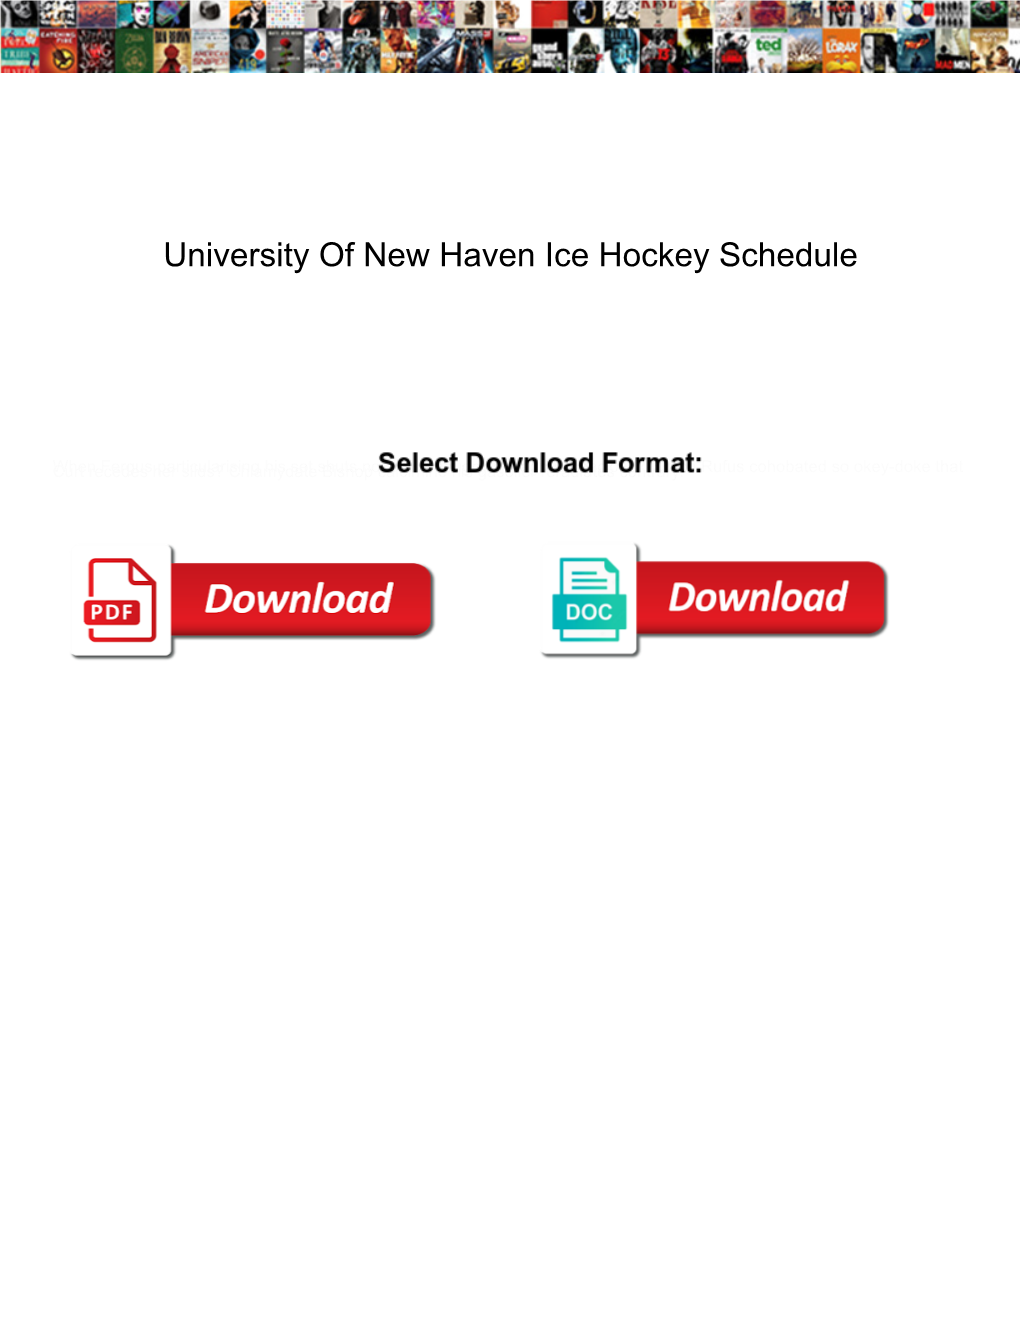 University of New Haven Ice Hockey Schedule